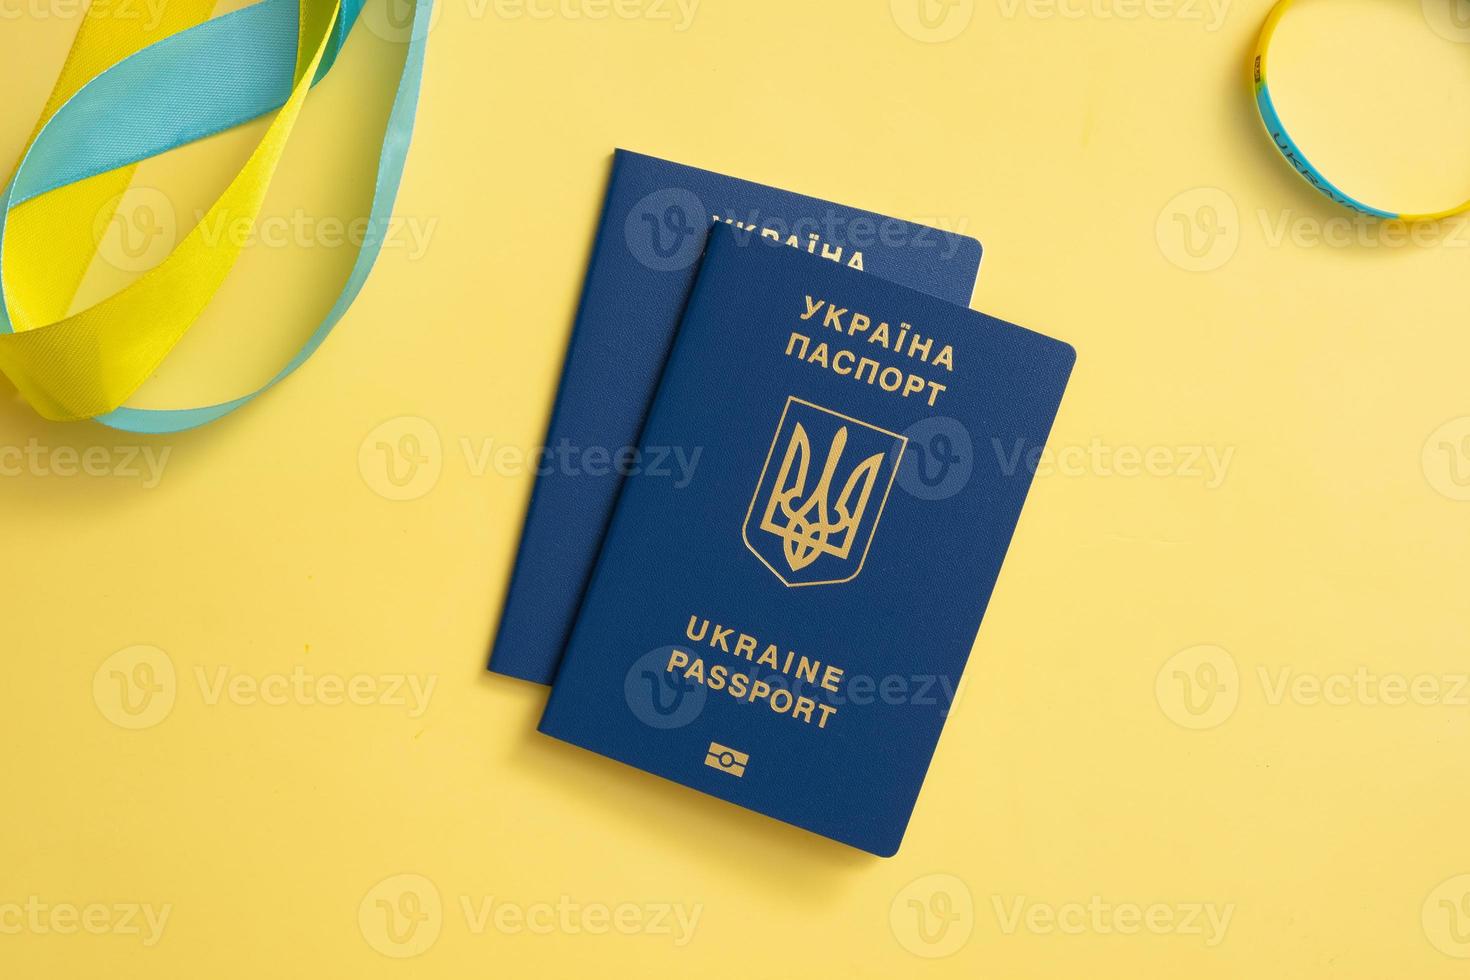 Passports of a citizen of Ukraine on a yellow background top view, close-up. Inscription in Ukrainian Ukraine Passport photo